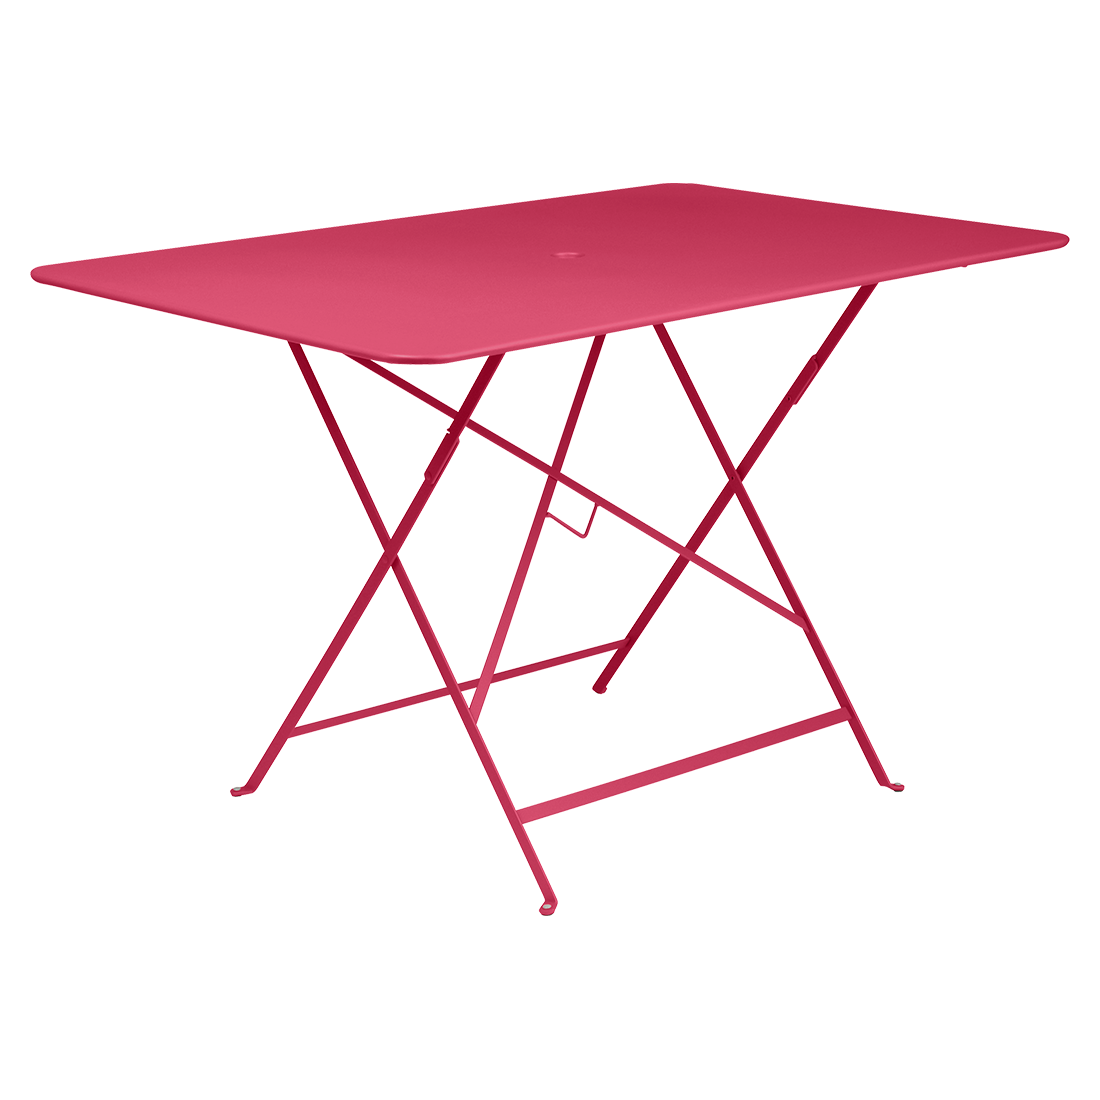 petite table metal, table de jardin fermob, table bistro, petite table pliante, table rose